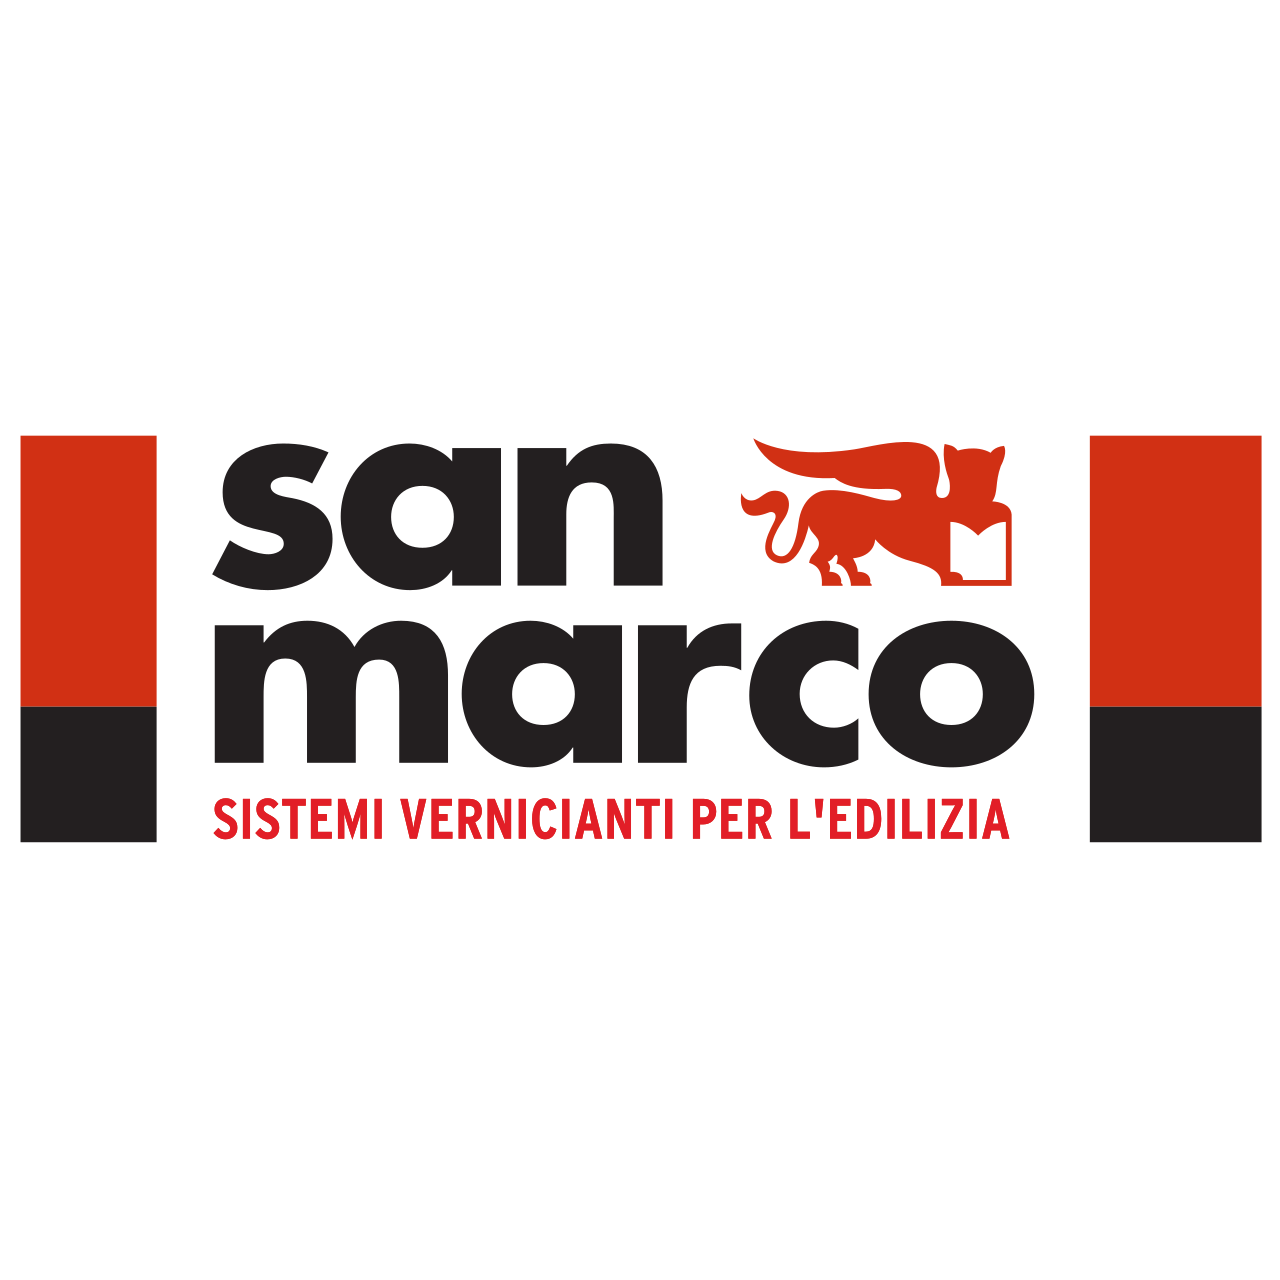 La San Marco Logo PNG Transparent & SVG Vector - Freebie Supply